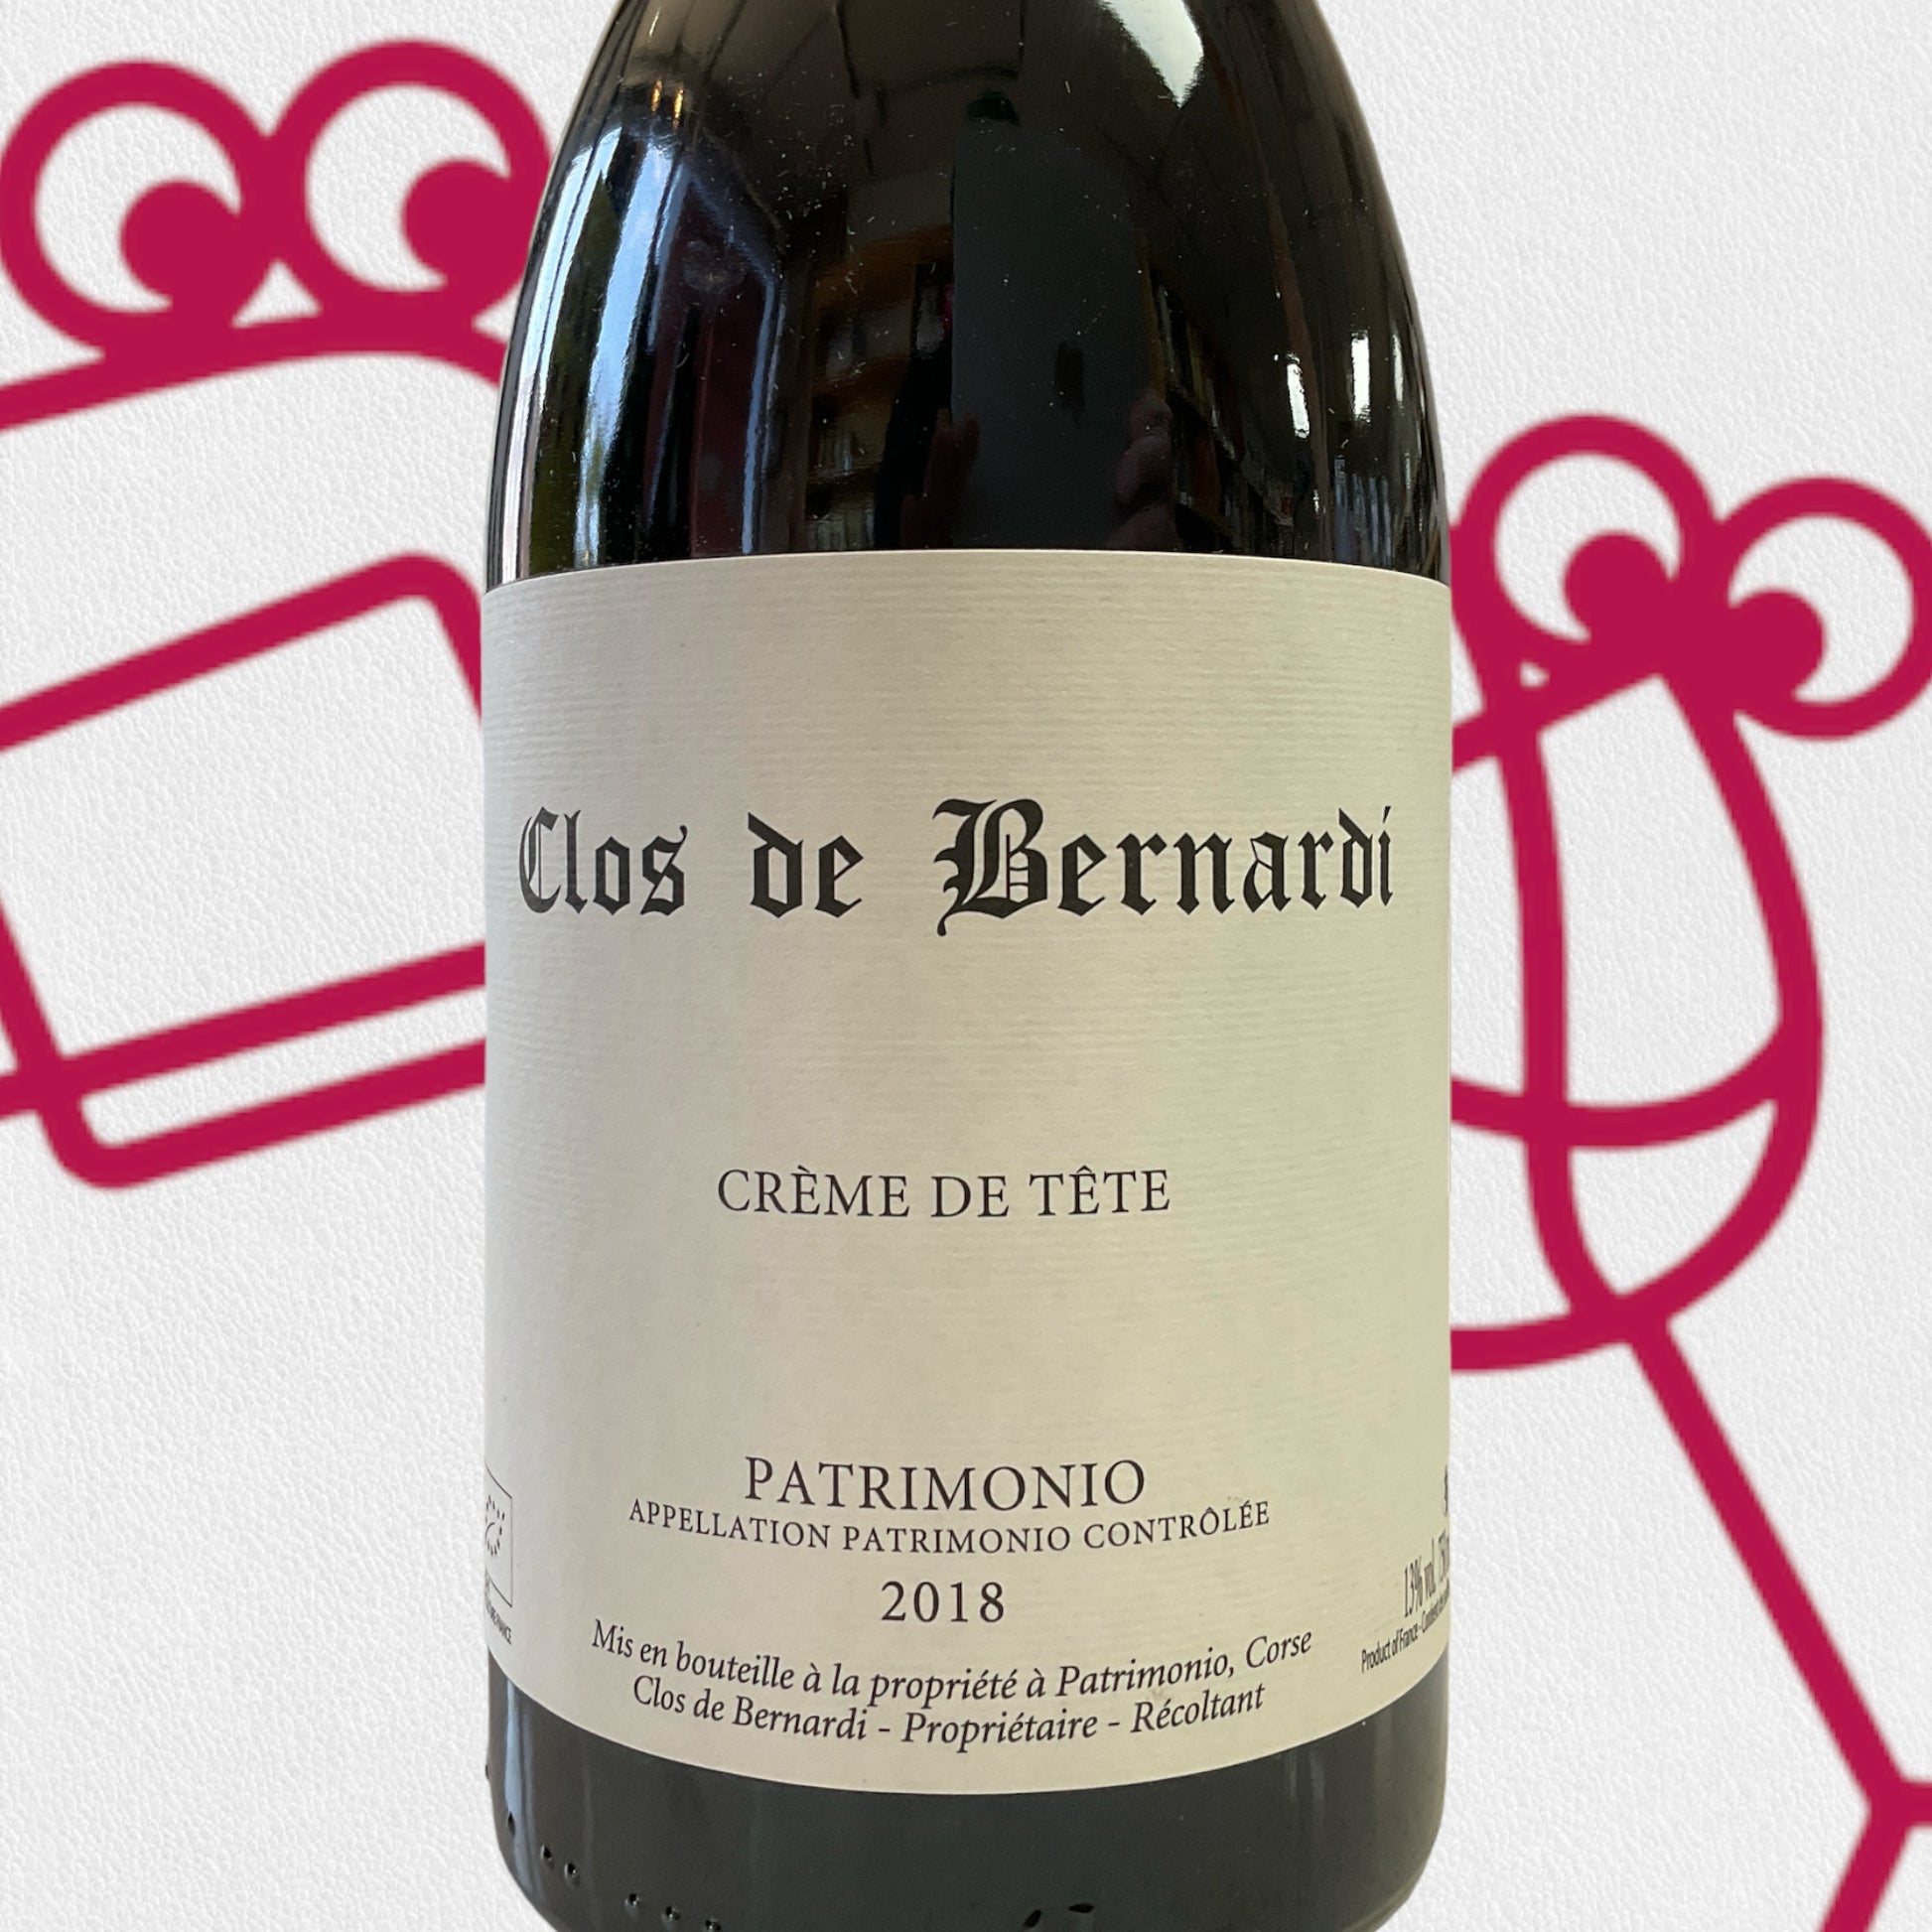 Clos de Bernardi 'Creme de Tete' 2018 Patrimonio, Corsica - Williston Park Wines & Spirits